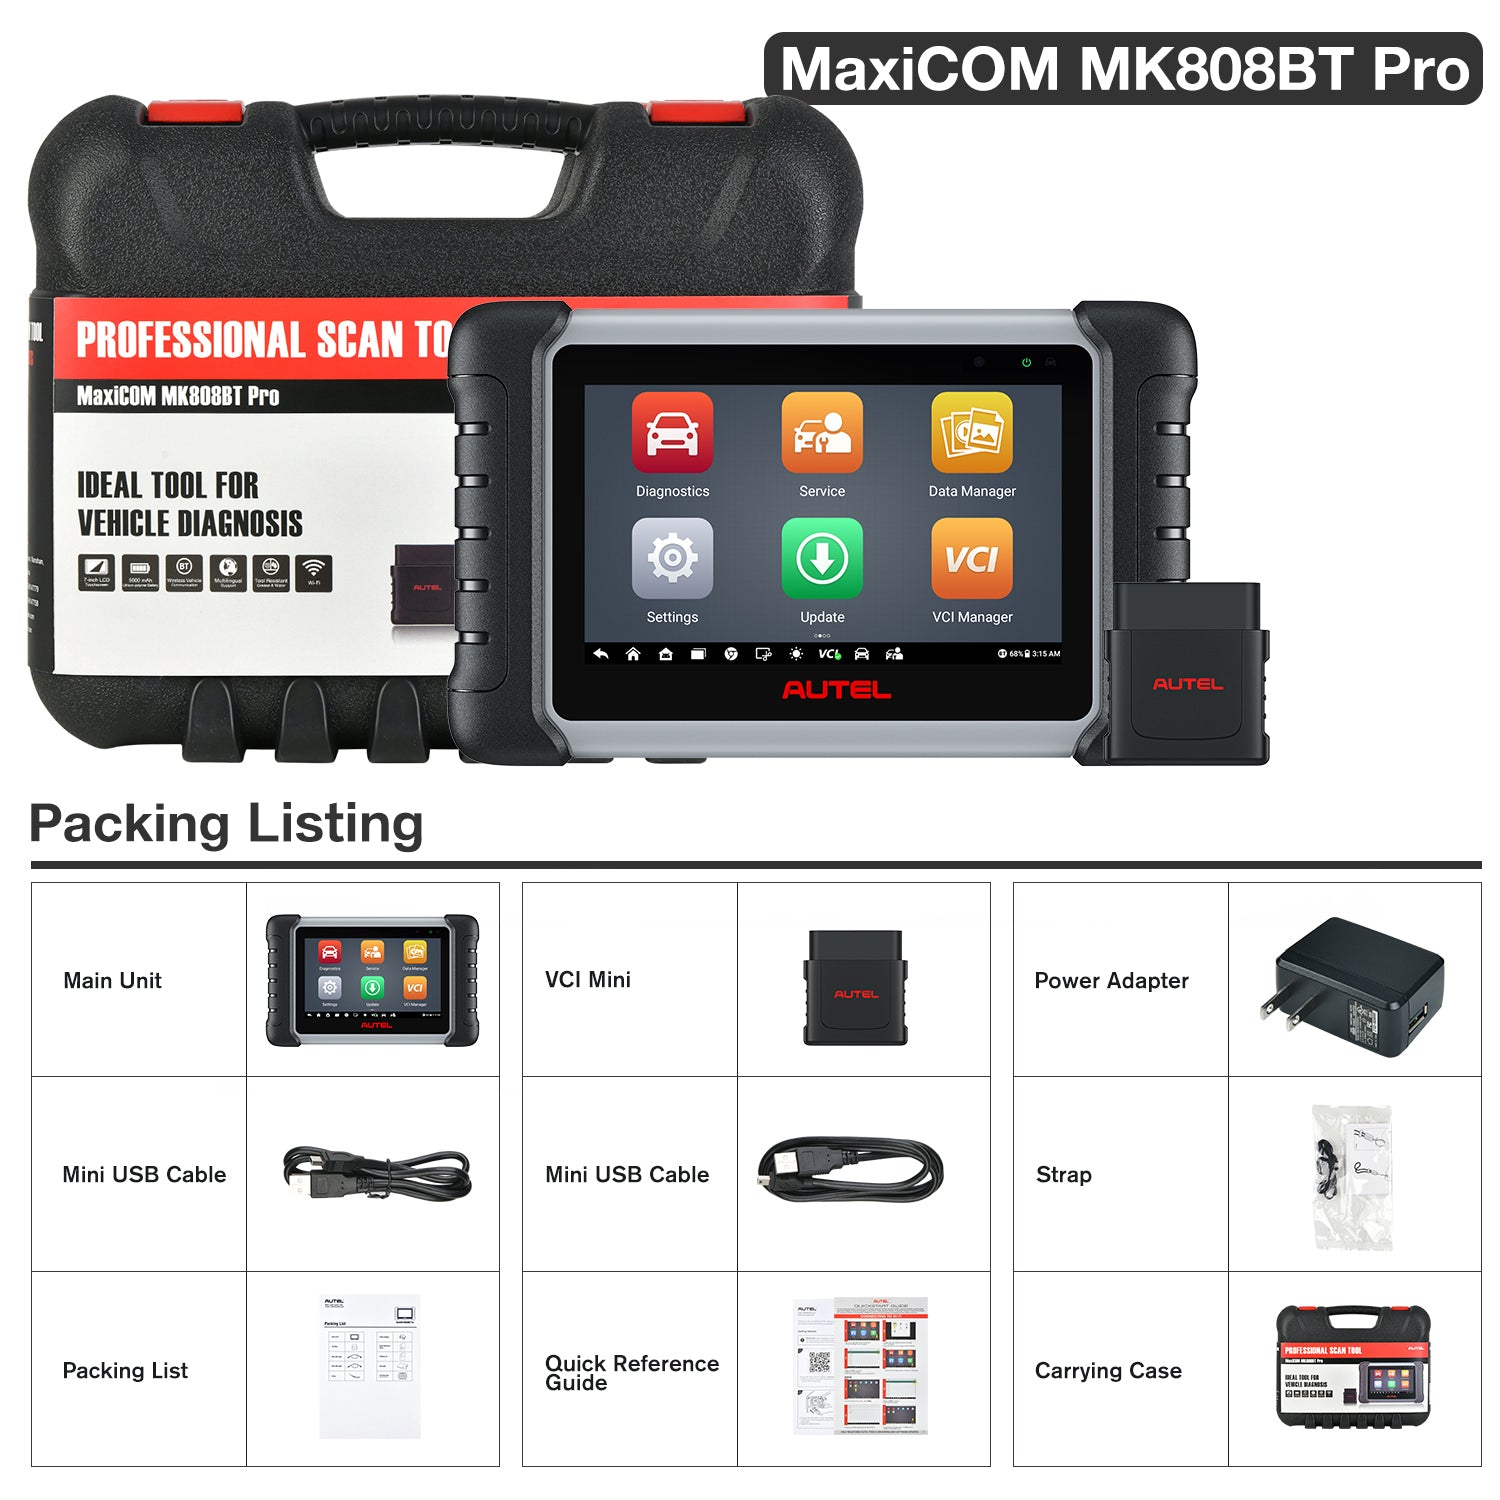 MaxiCOM MK808BT PRO Package List